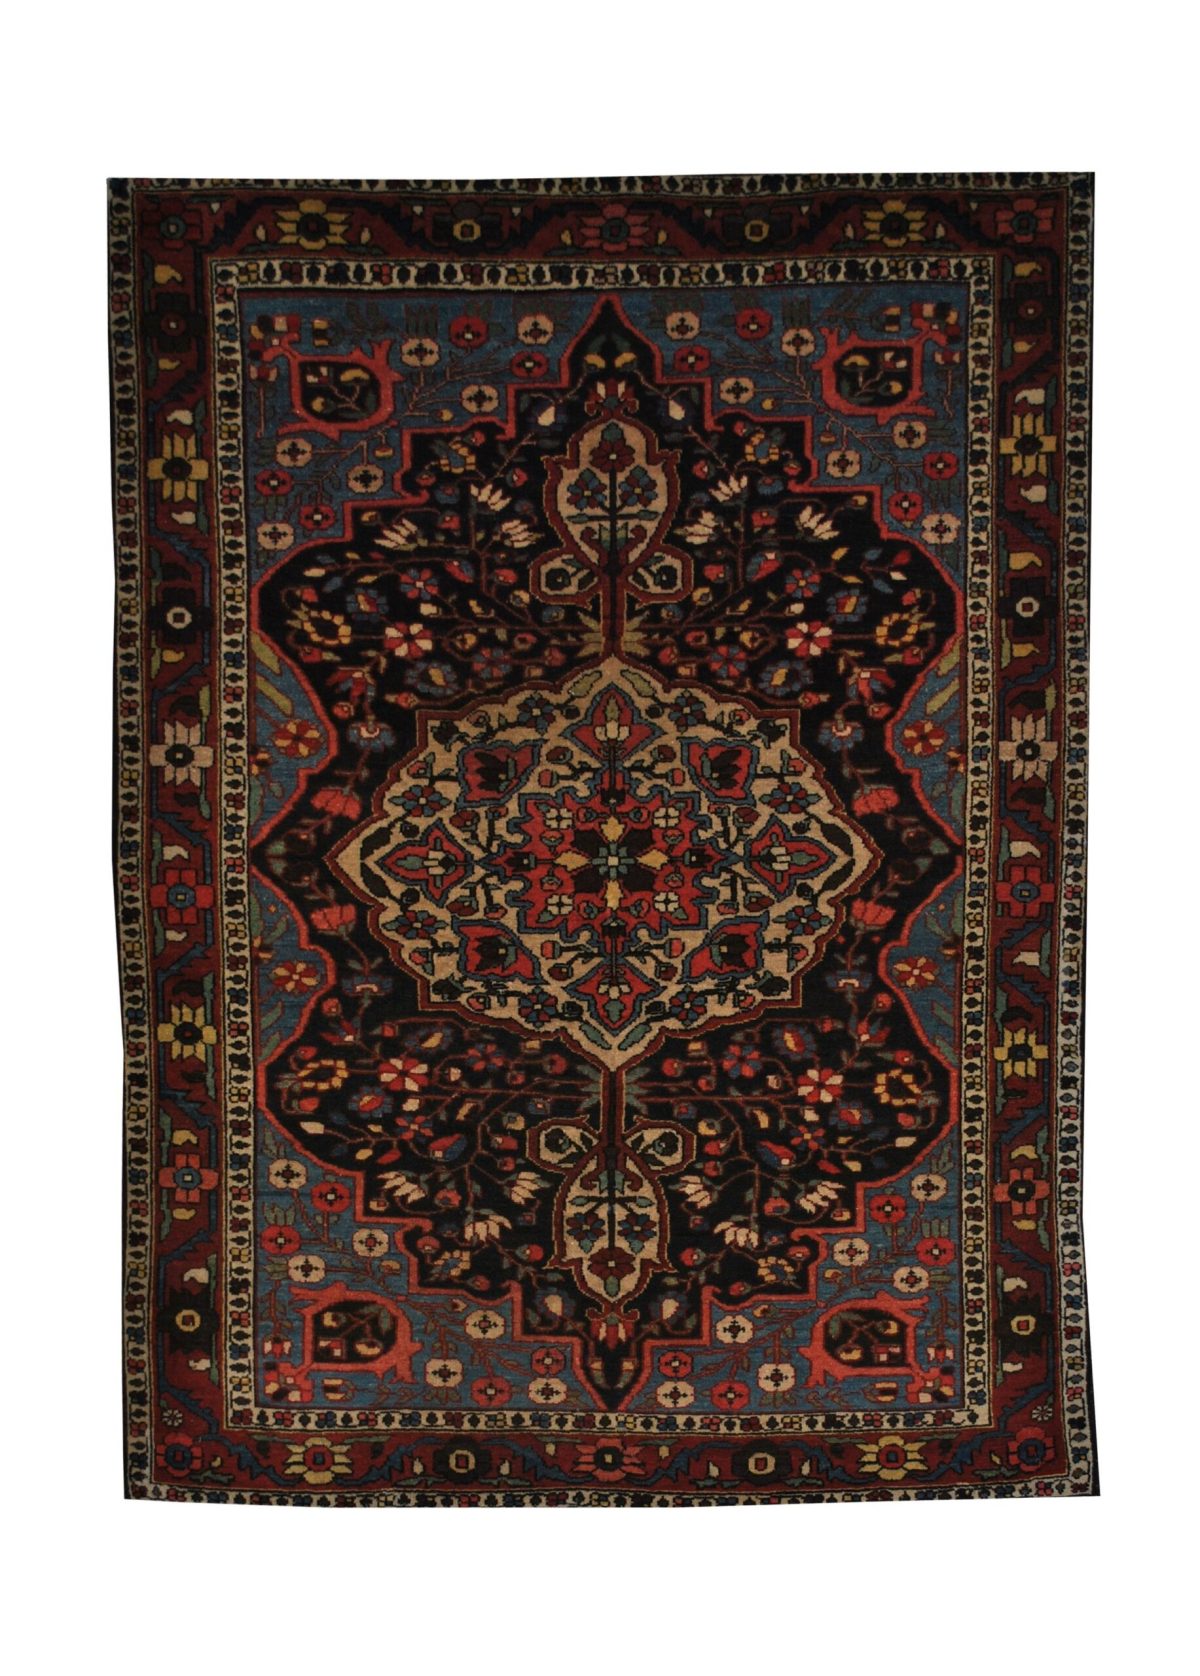 Antique Persian Bakhtiari 4' 6" x 6' 5" Handmade Wool Area Rug - Shabahang Royal Carpet